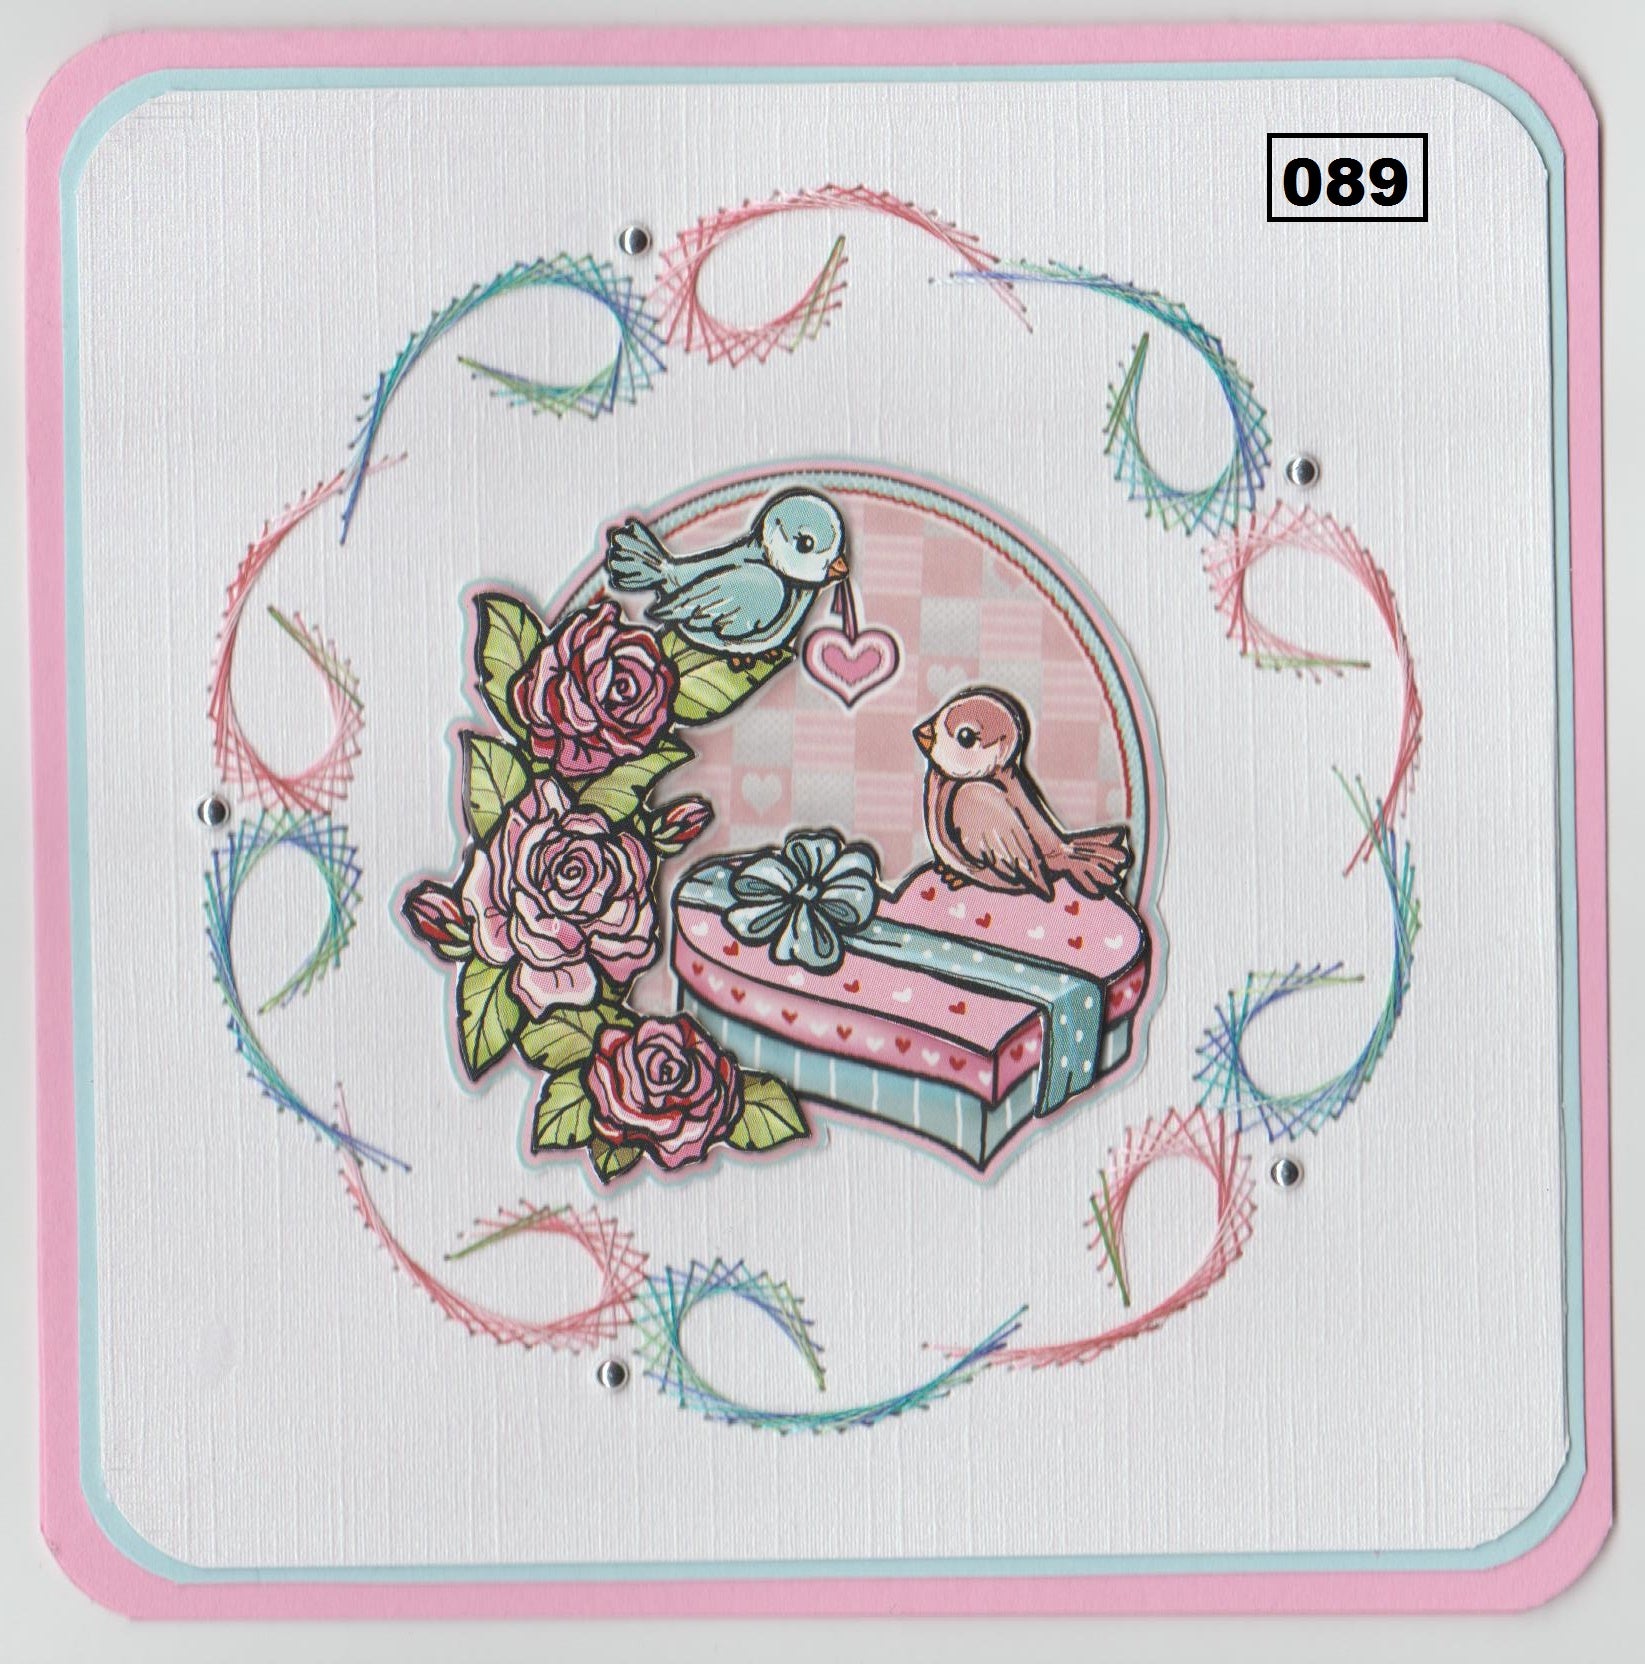 Laura's Design Digital Embroidery Pattern - Flourish Wreath